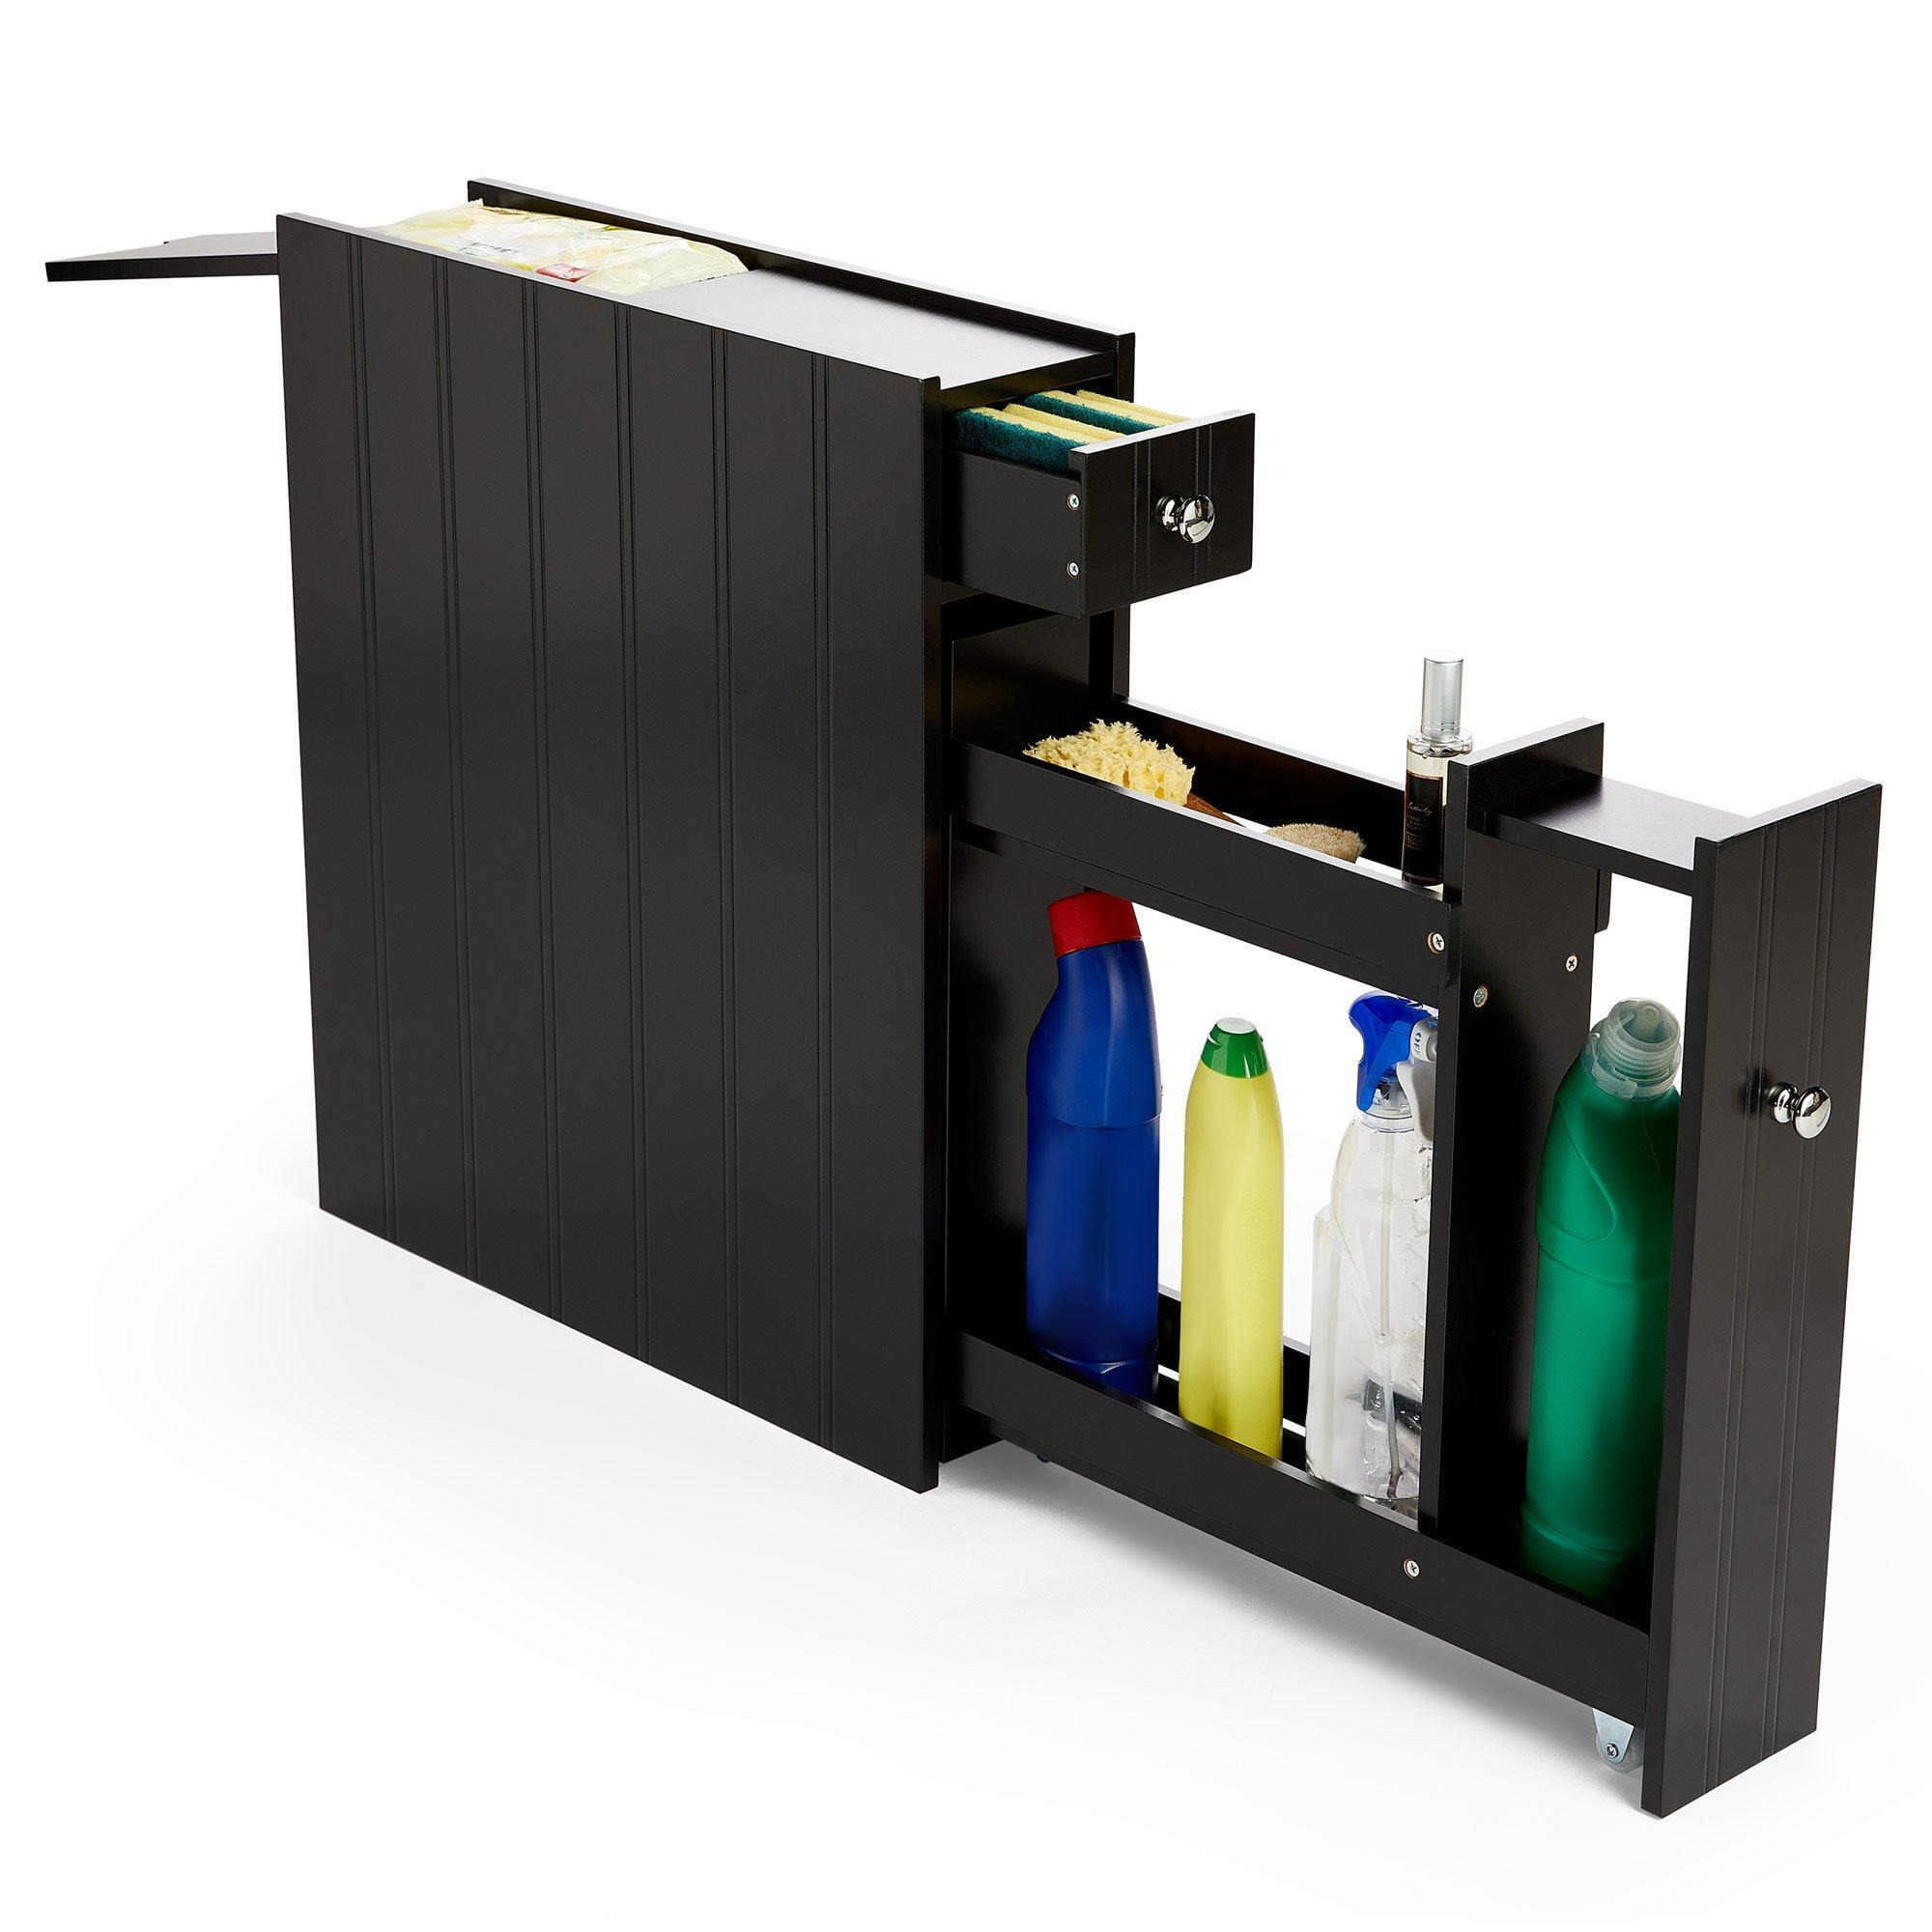 Freestanding Shaker Style Slimline Bathroom Storage Unit - image 1